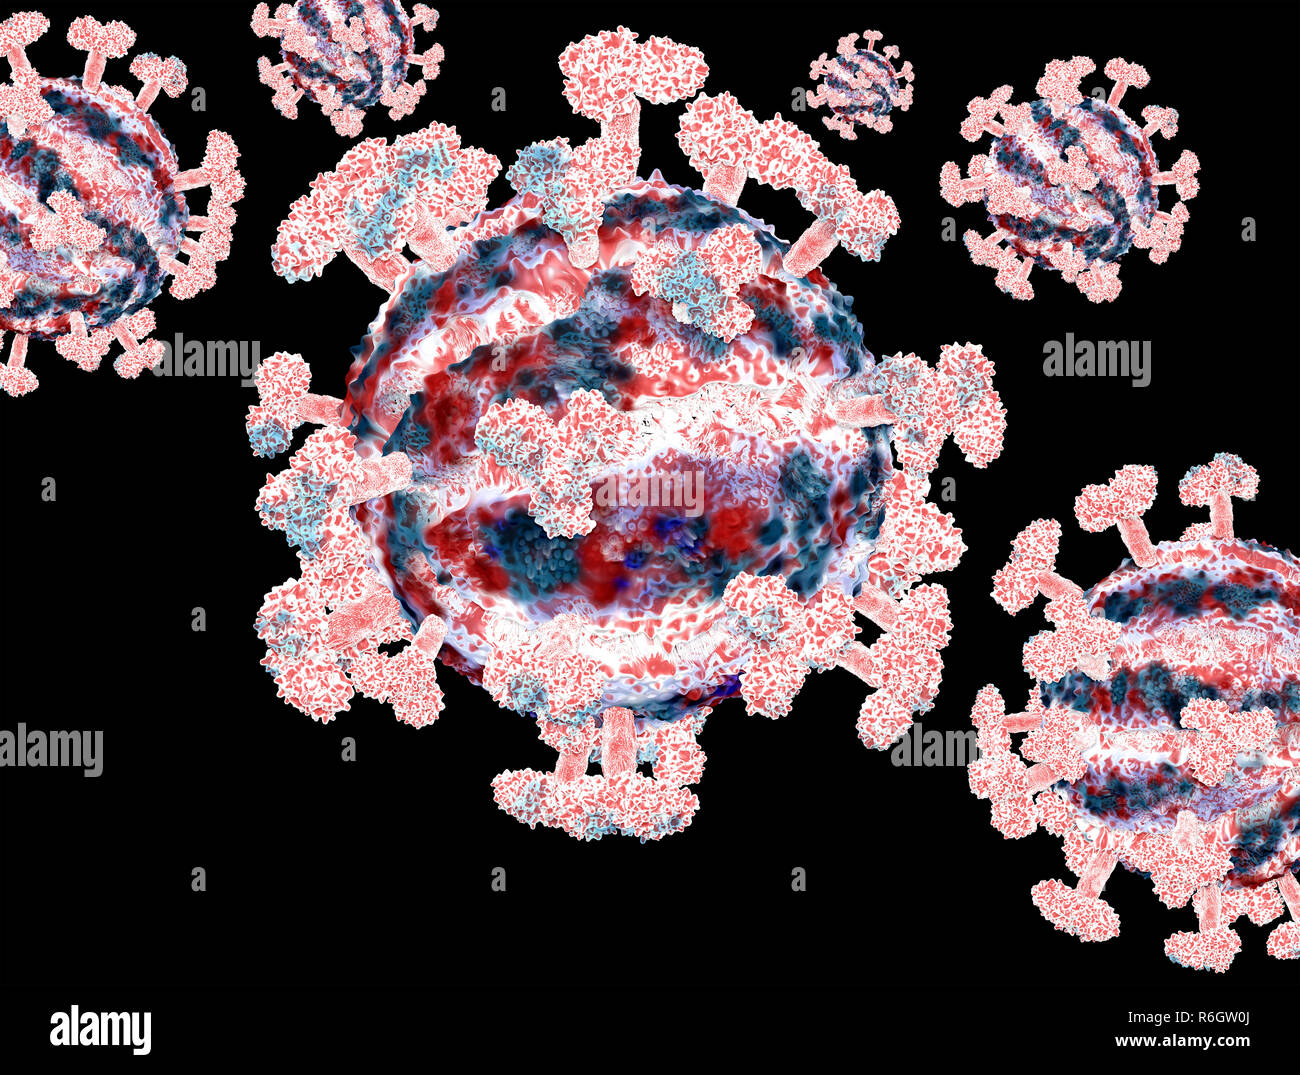 Illustrazioni di virus di immunodeficienza umana, virus HIV Foto Stock